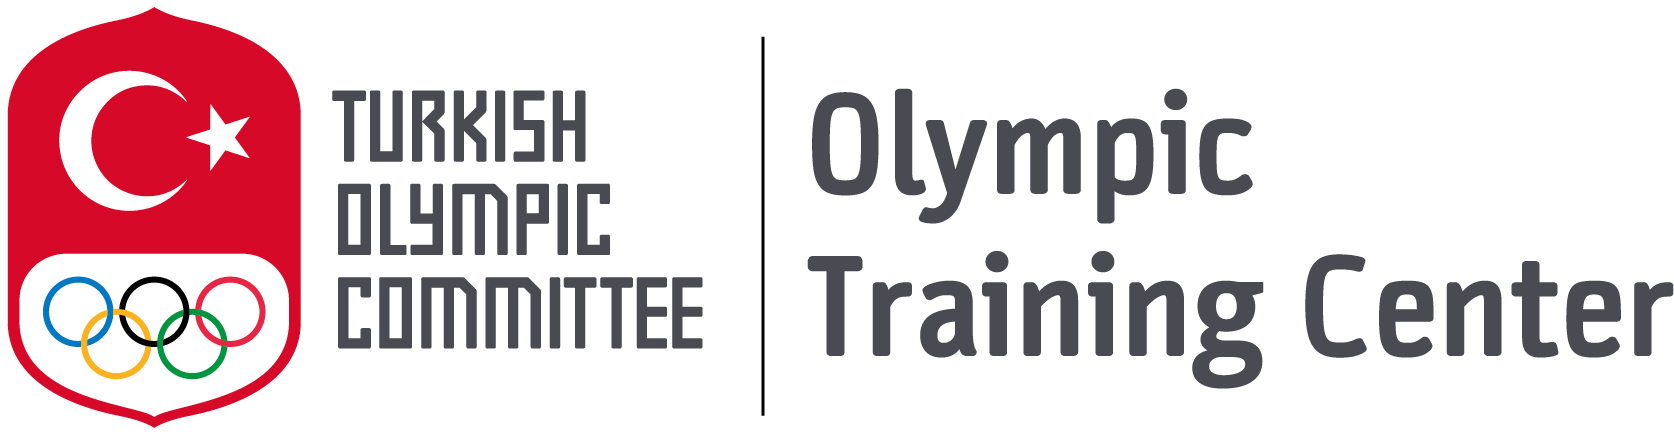 Olympic Training Center Sidebar EN